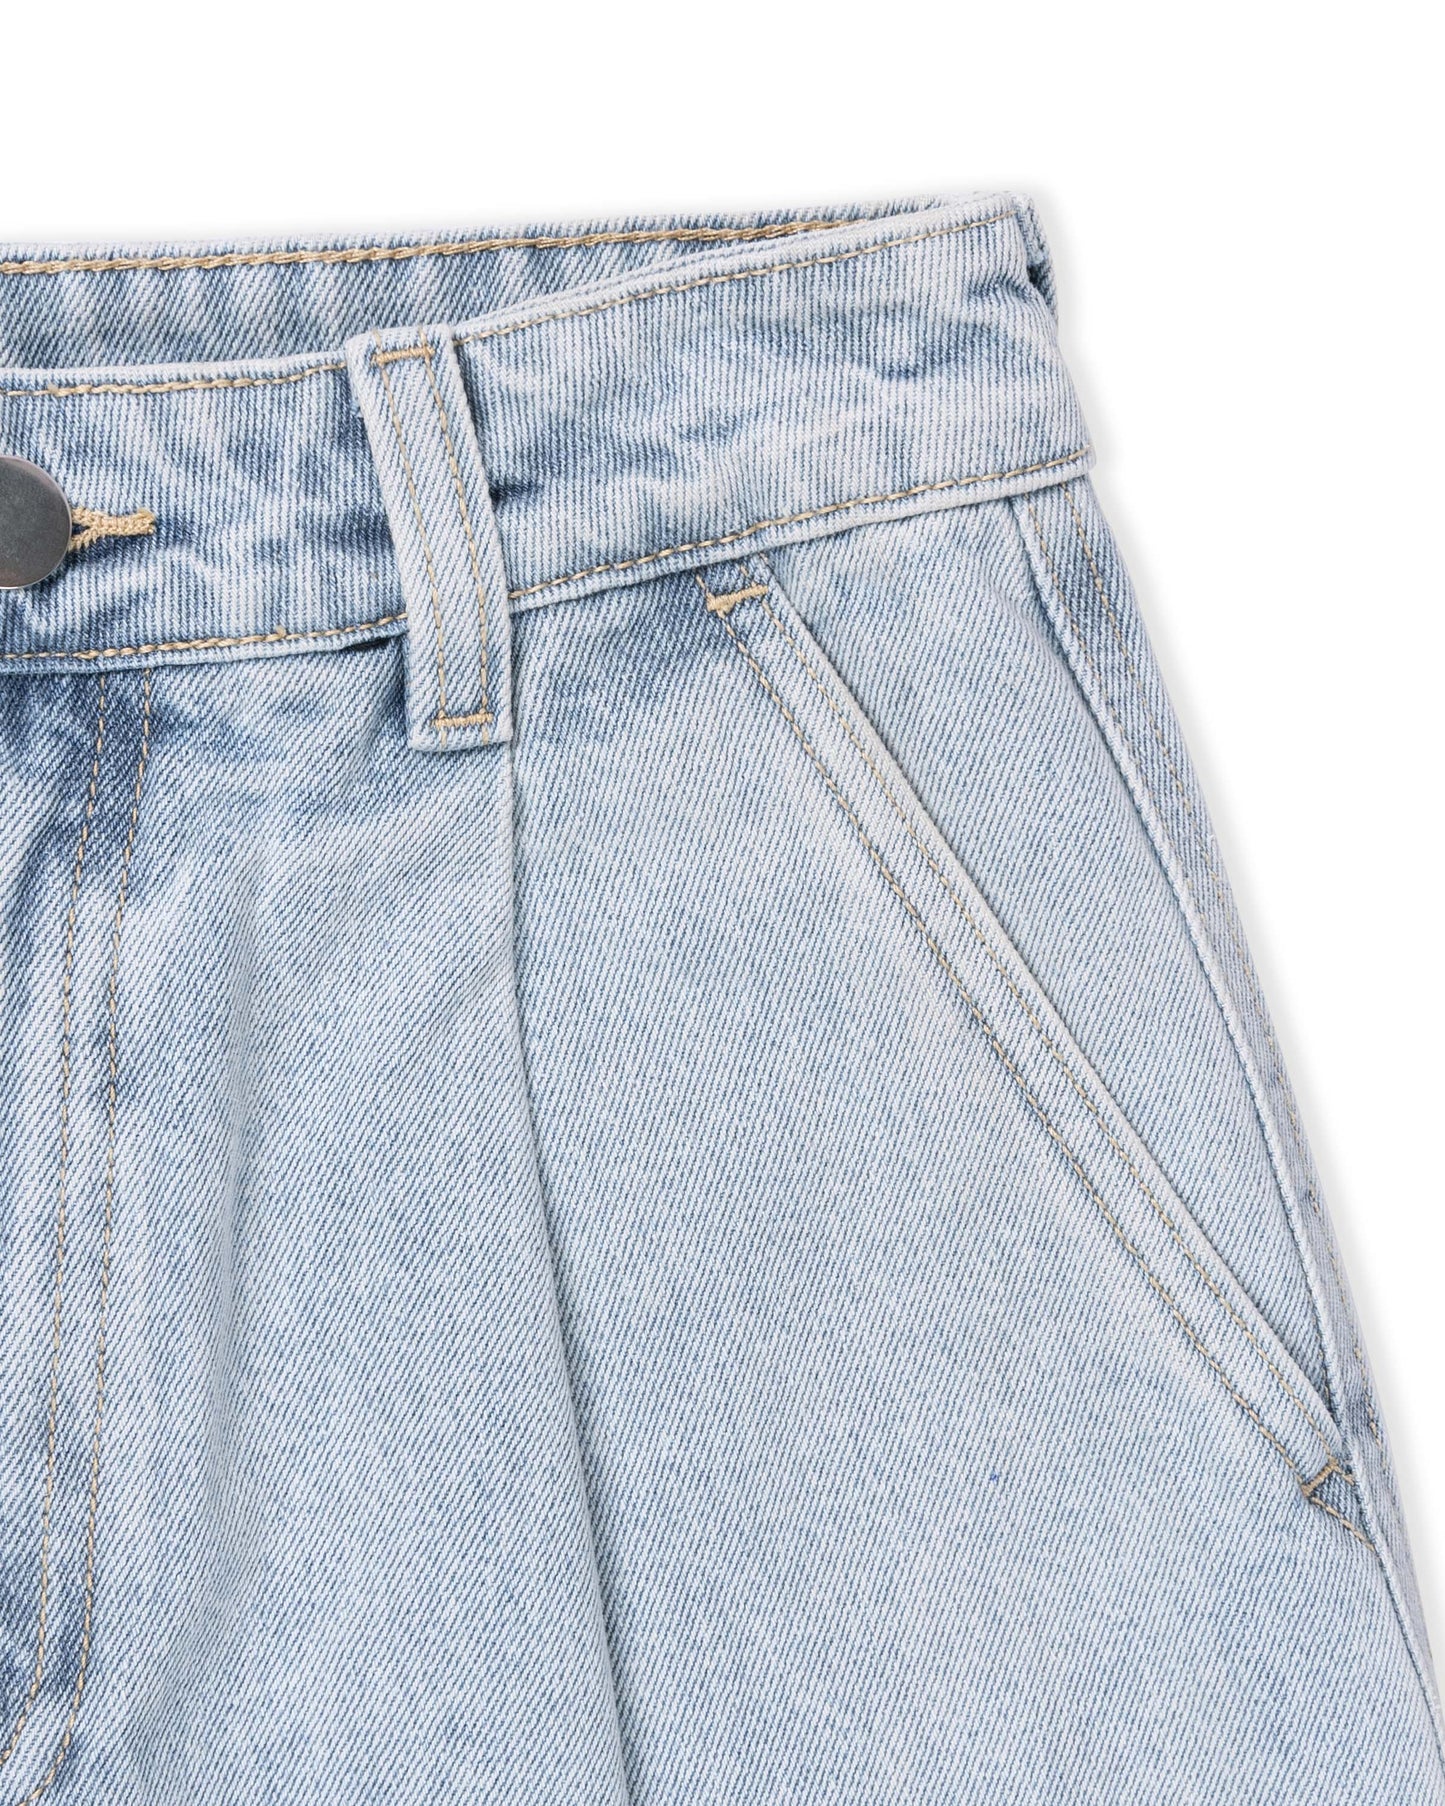 Levents® Classic Baggy Jeans/ Blue